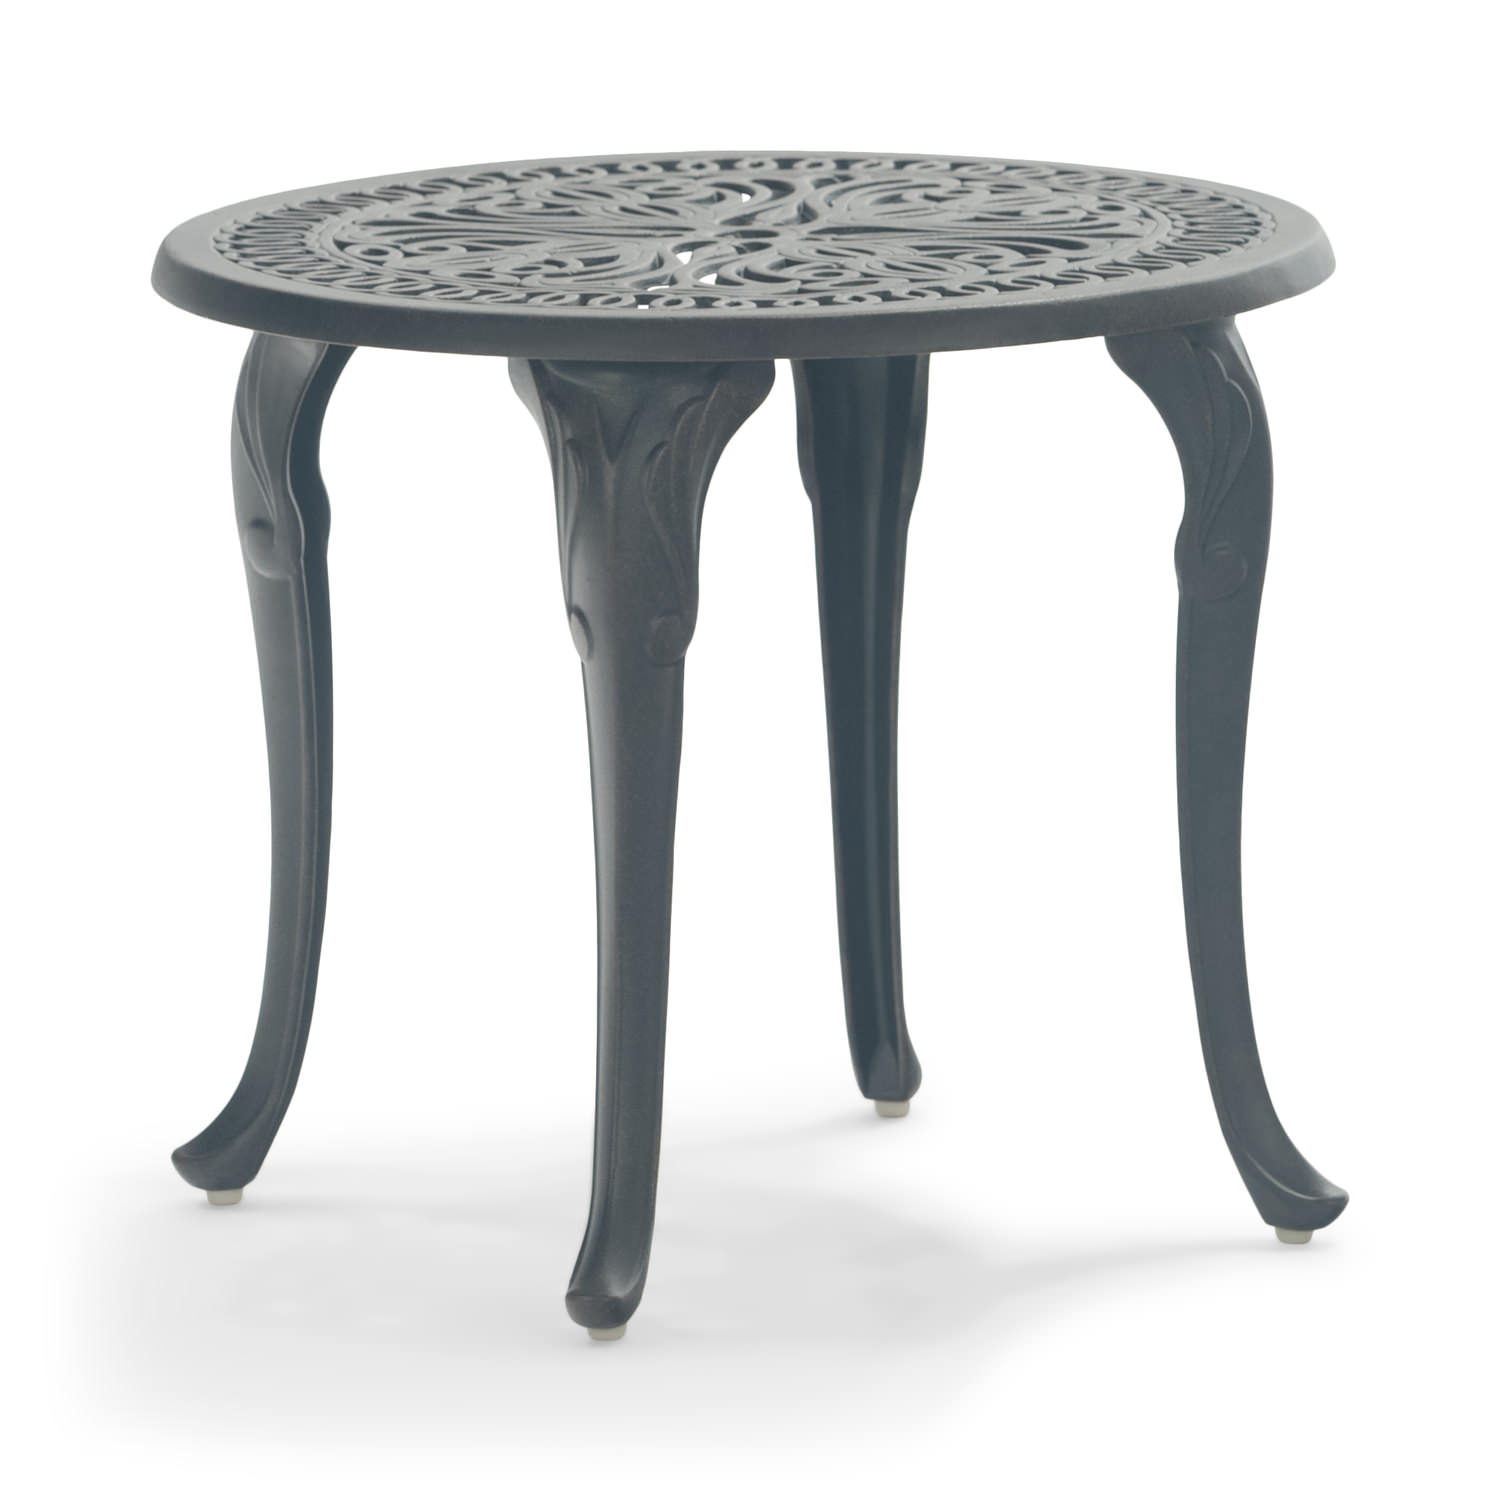 Elisabeth End Table Square Outdoor Cast Aluminum Patio Furniture Desert Bronze for sale online 